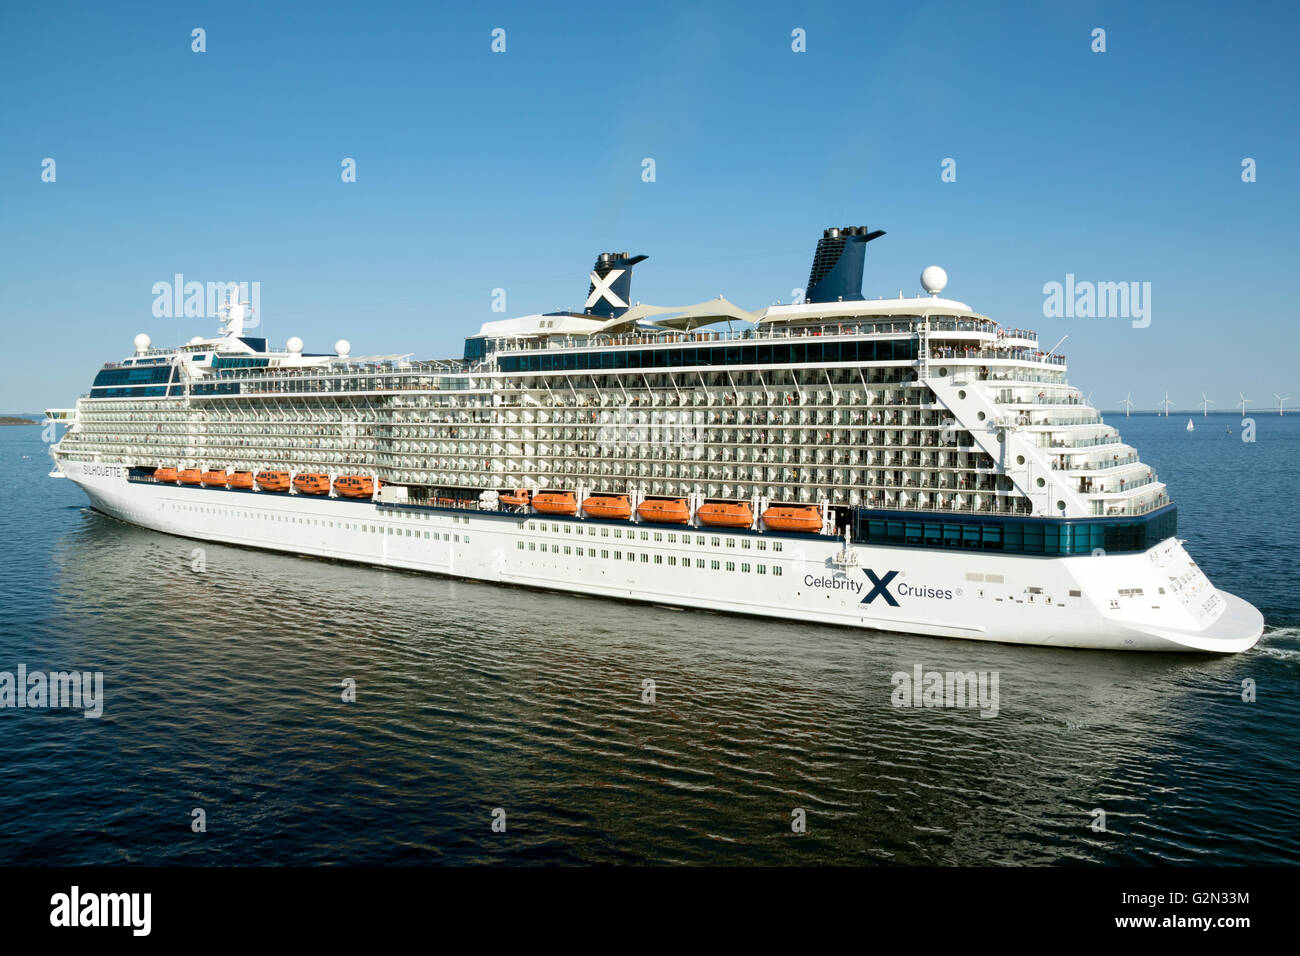 x on cruise ship